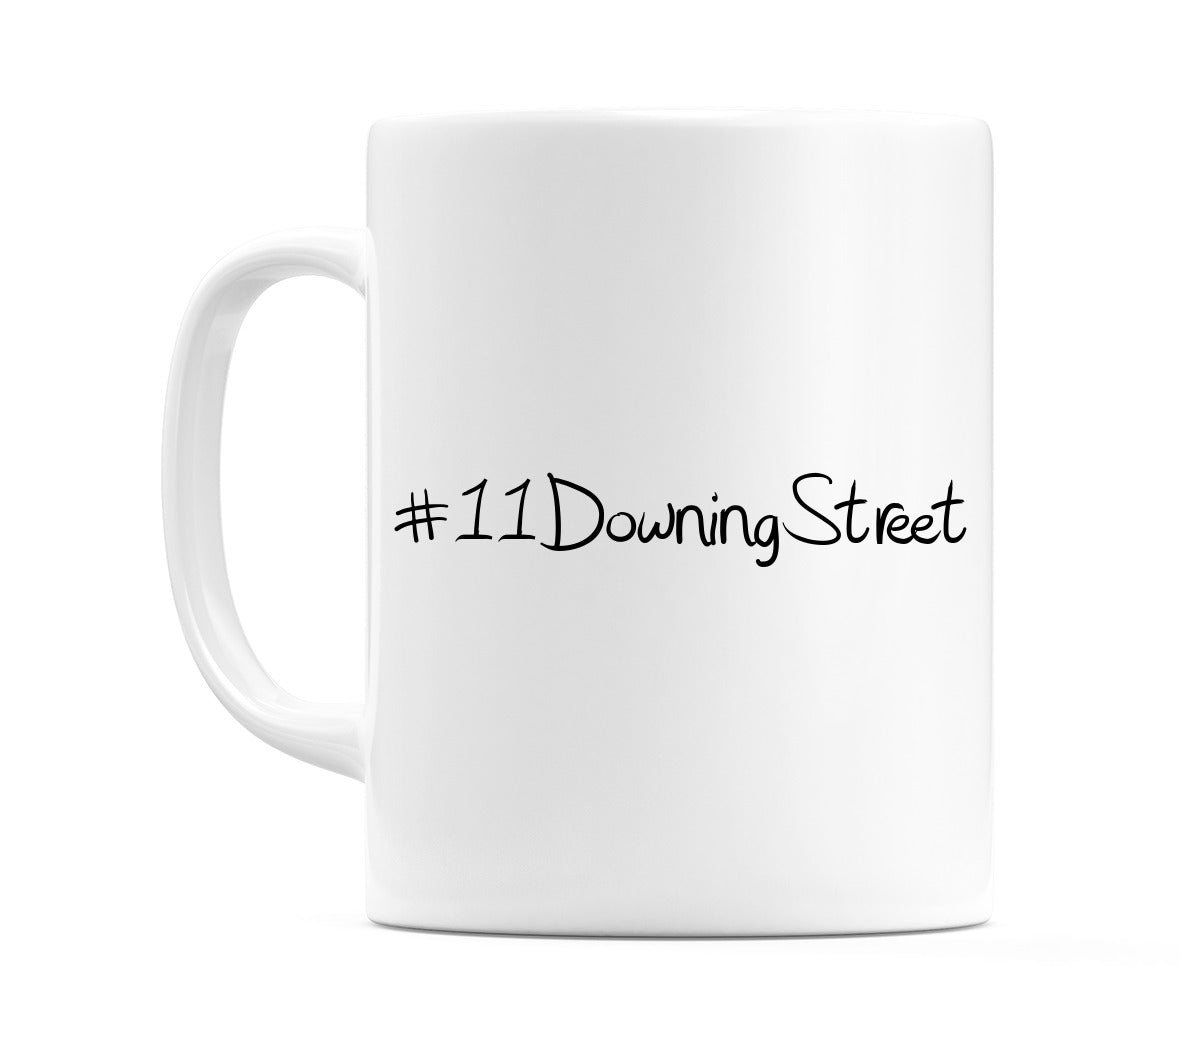 #11DowningStreet Mug